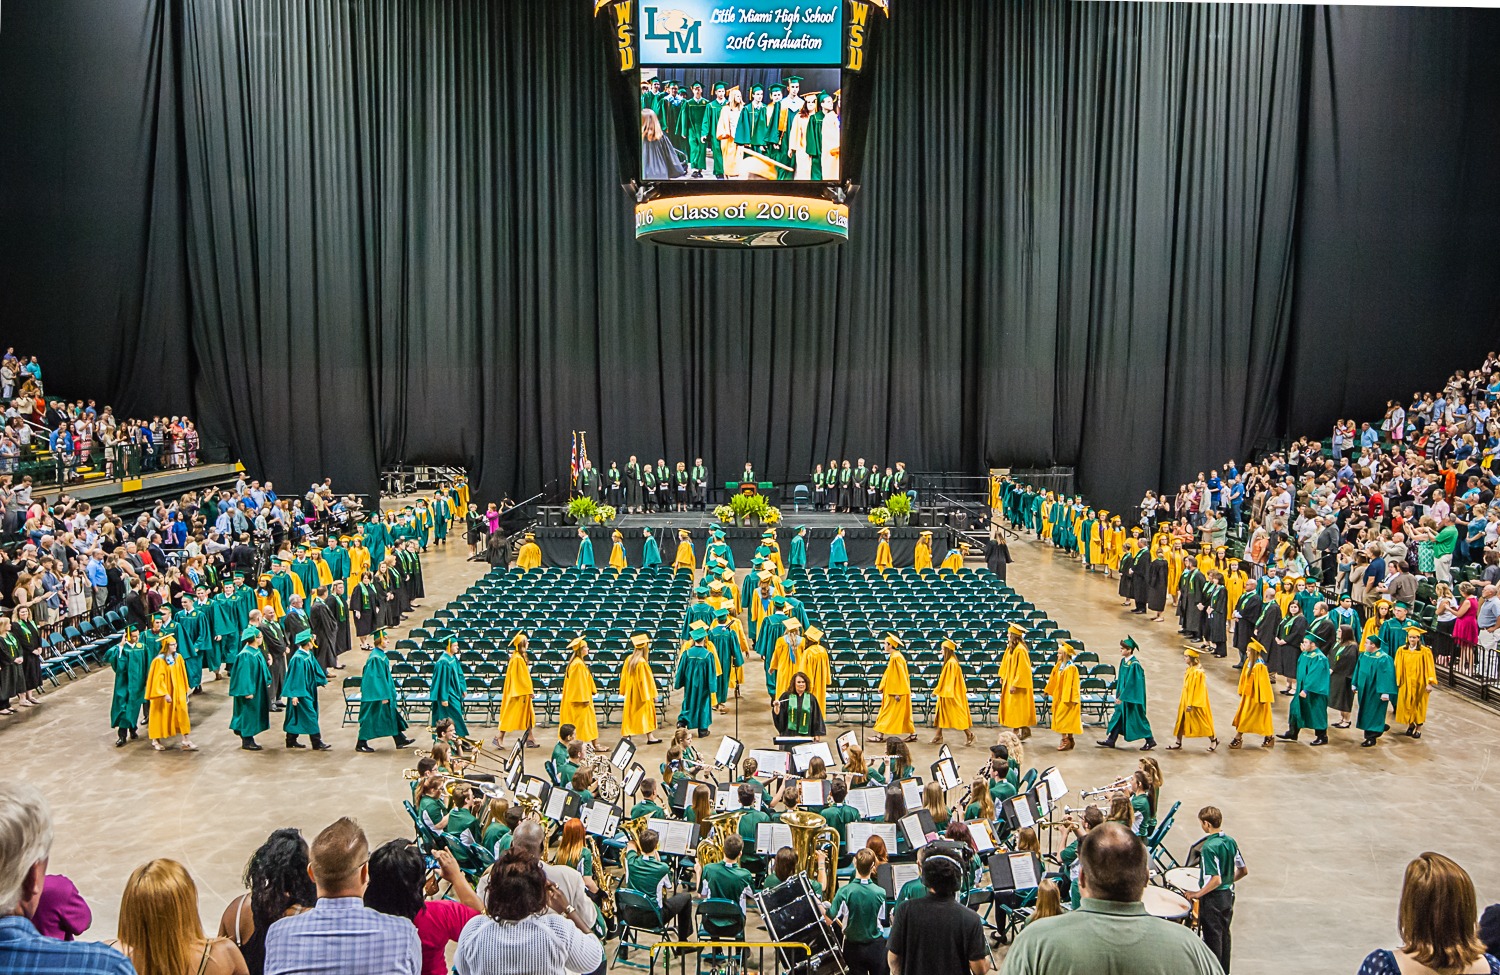 05-22-2016 Little Miami High School Commencement Ceremony